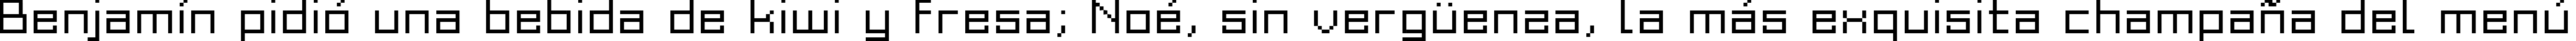 Пример написания шрифтом Grixel Acme 9 Regular Xtnd текста на испанском